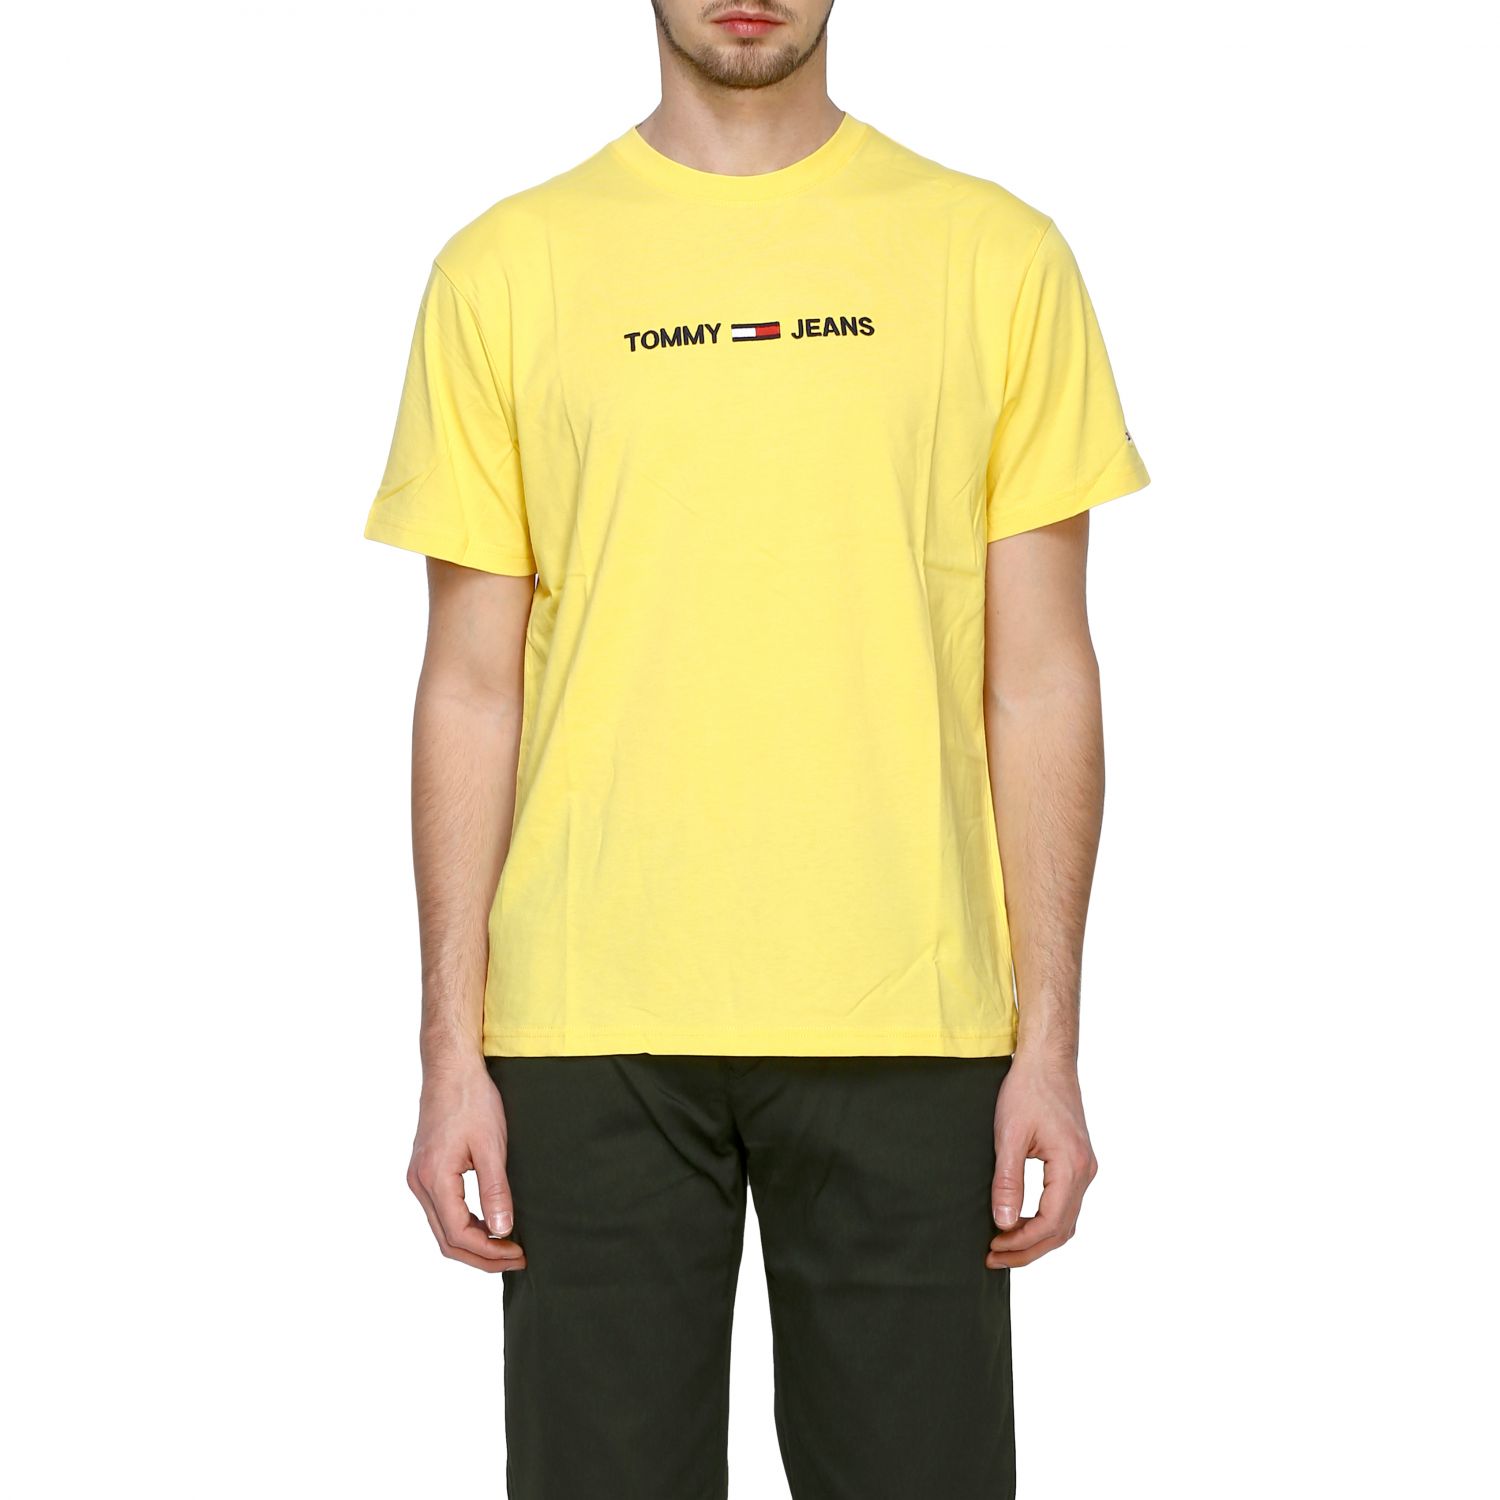 TOMMY HILFIGER: T-shirt men - Yellow | T-Shirt Tommy Hilfiger ...